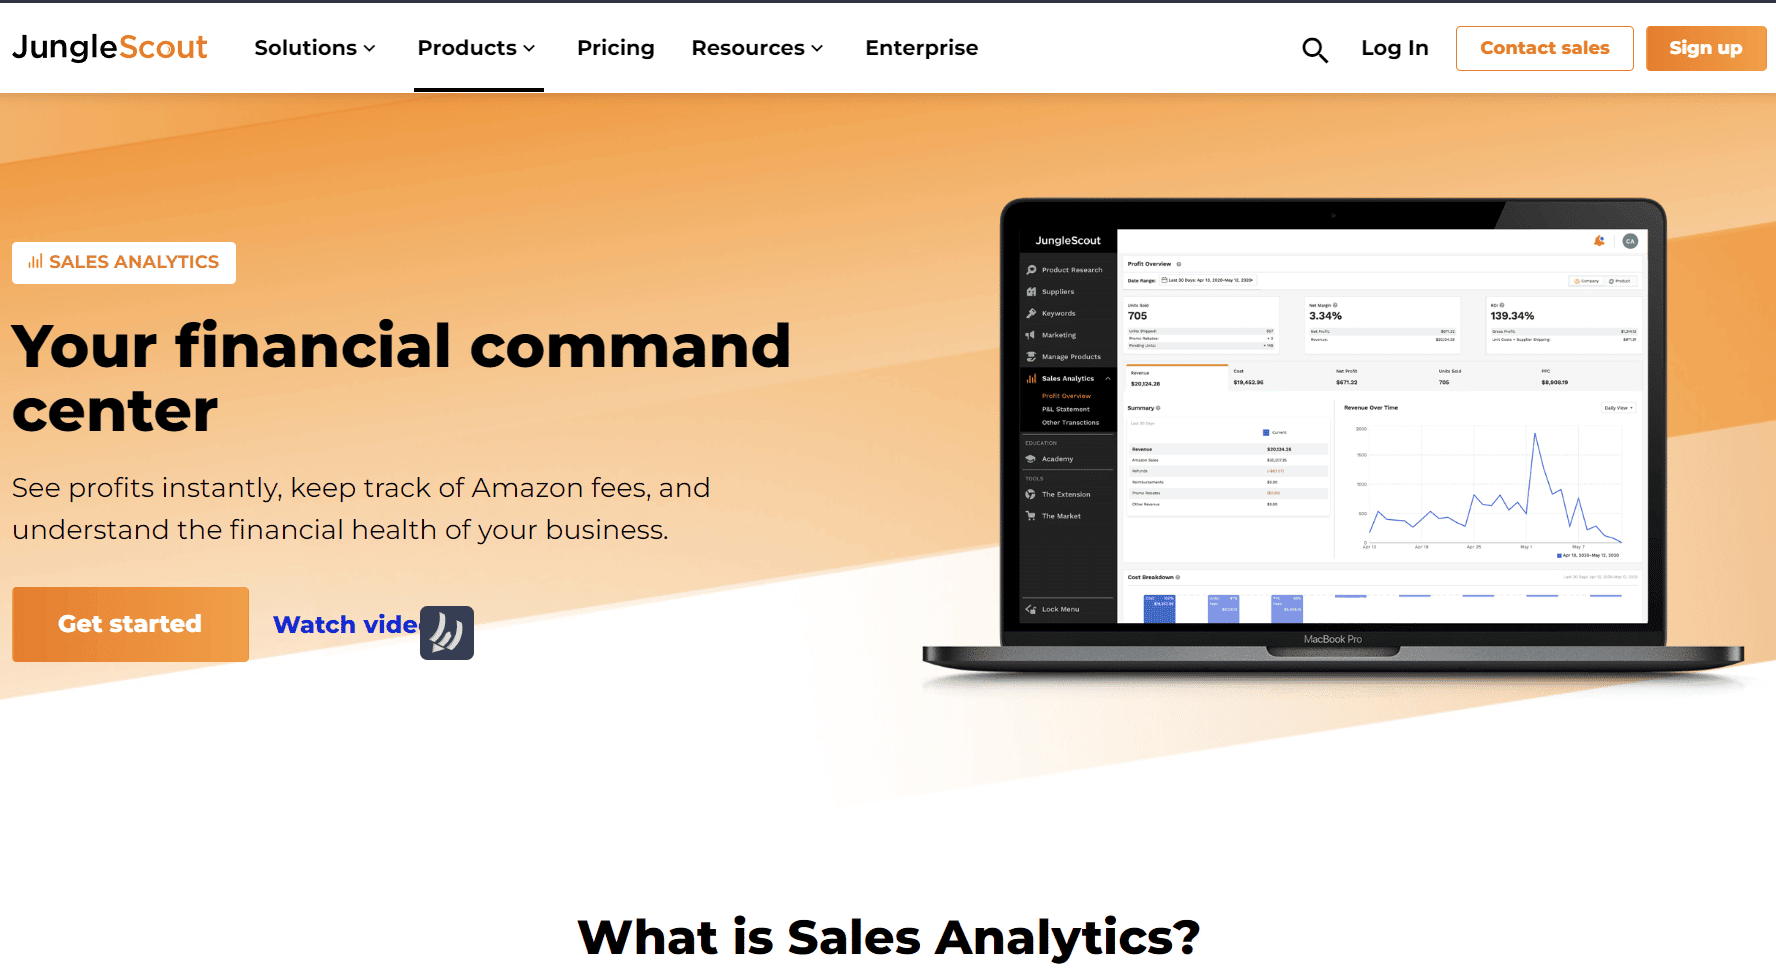 JungleScout Sales Analytics